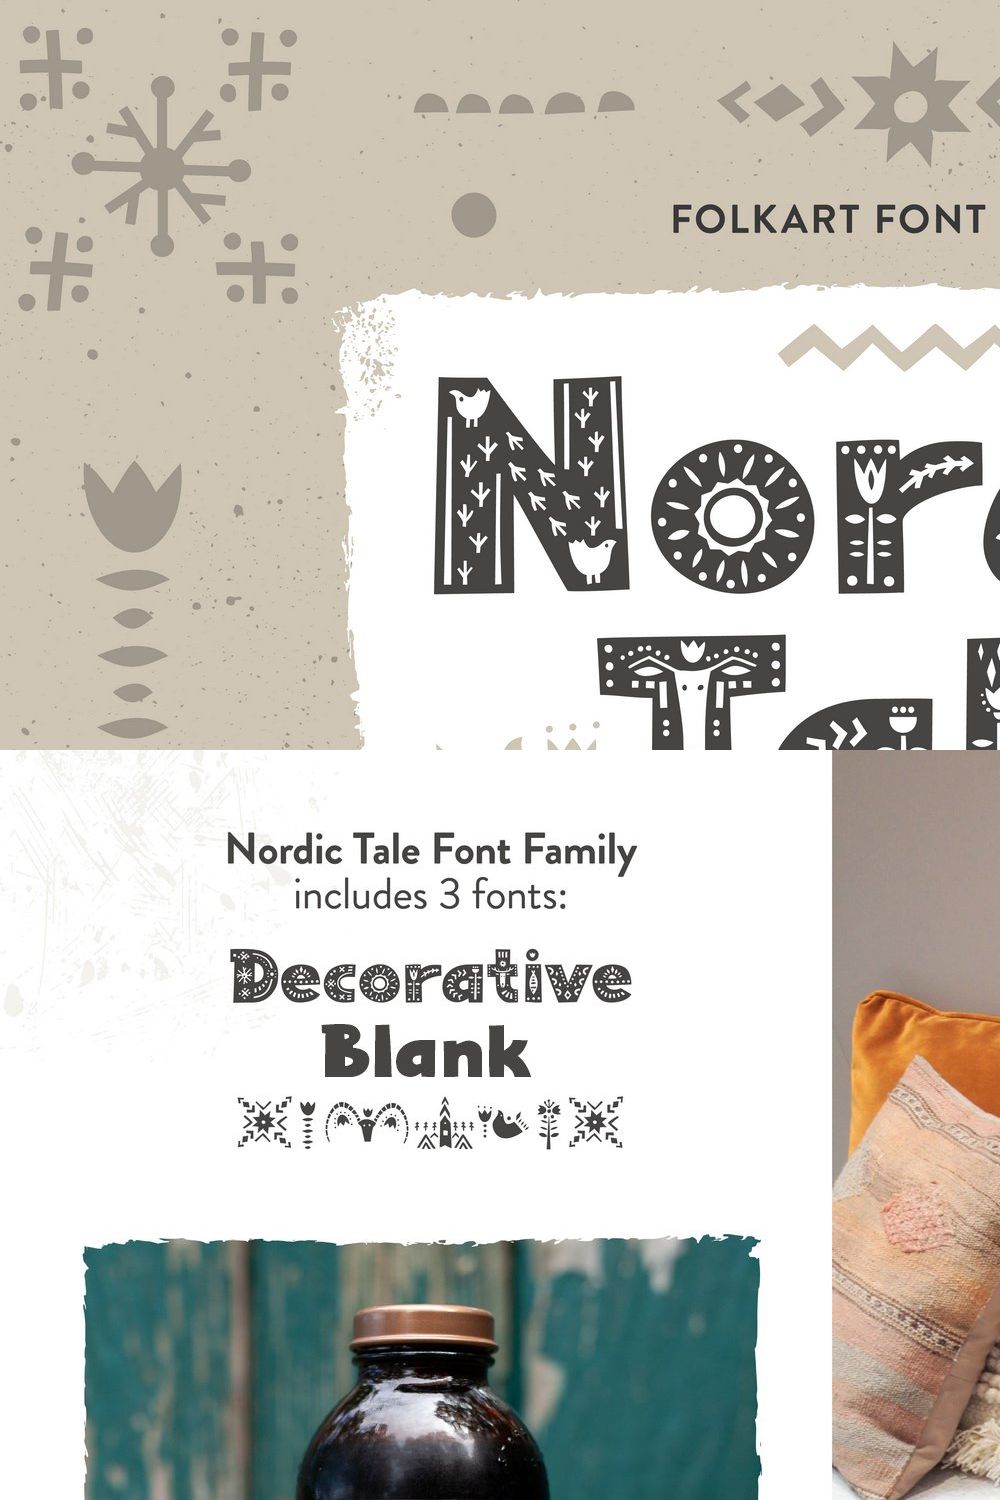 Nordic Tale - Folkart Font Family pinterest preview image.